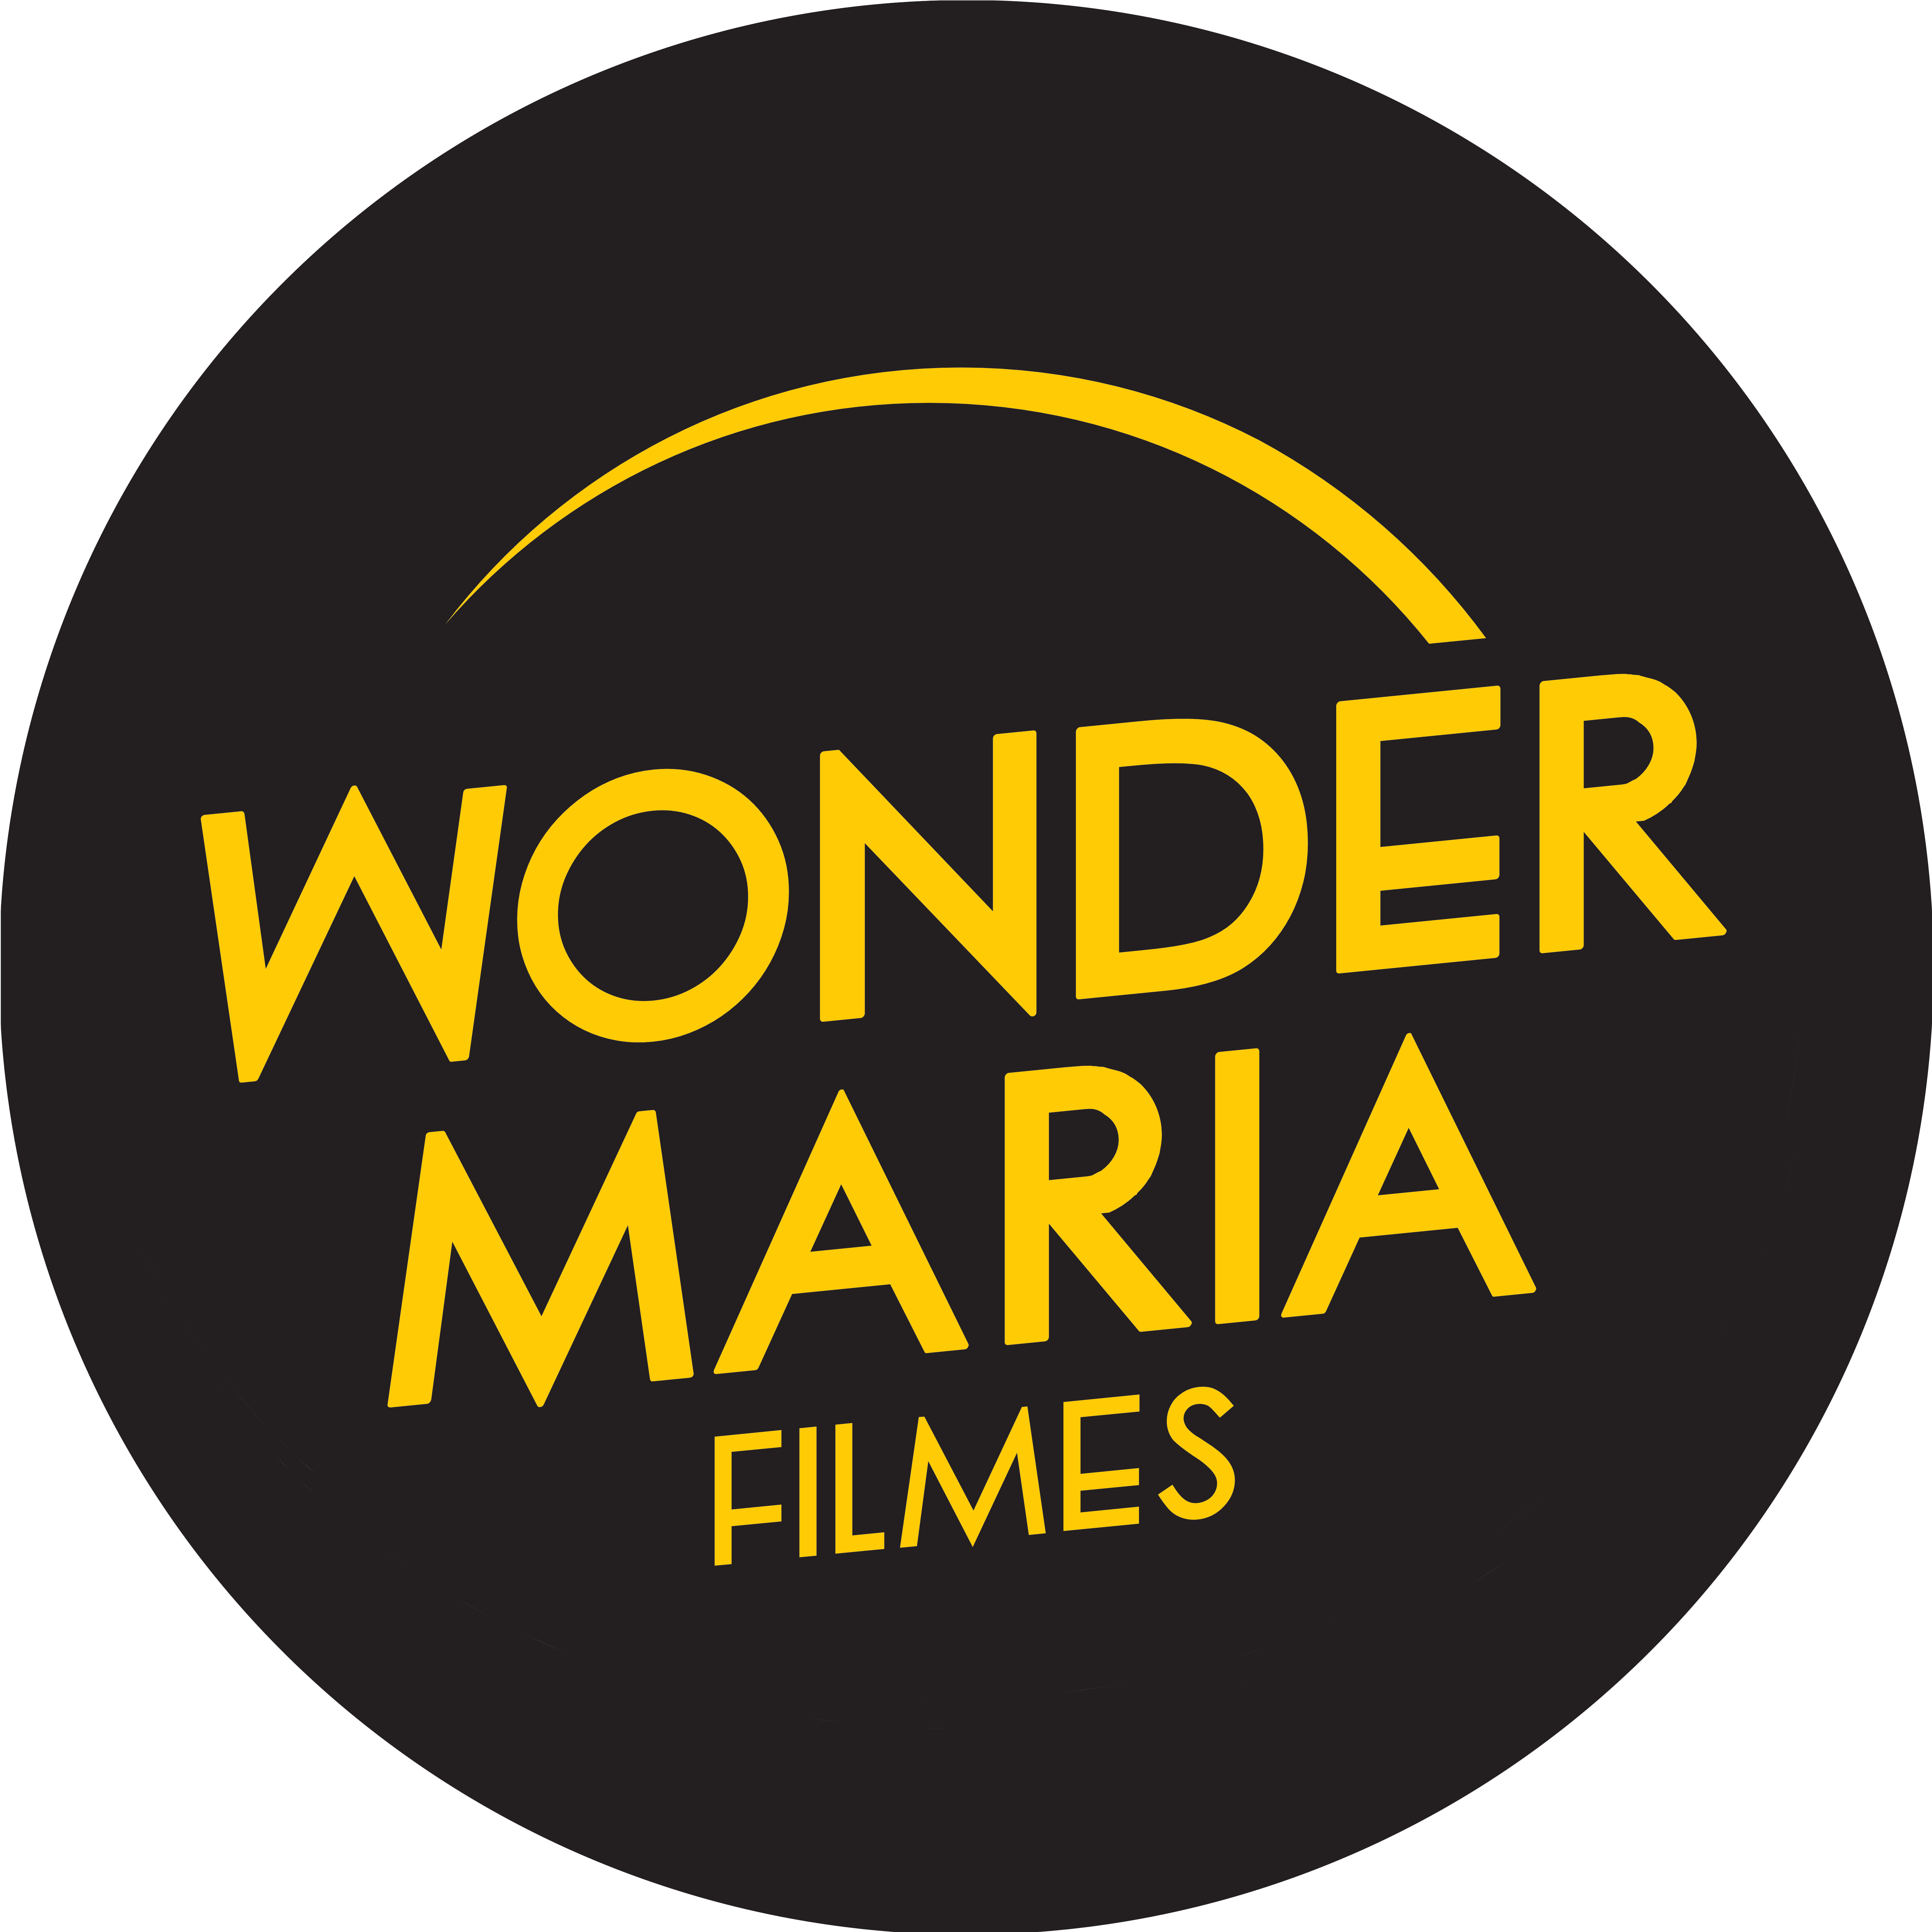 Wonder Maria Filmes